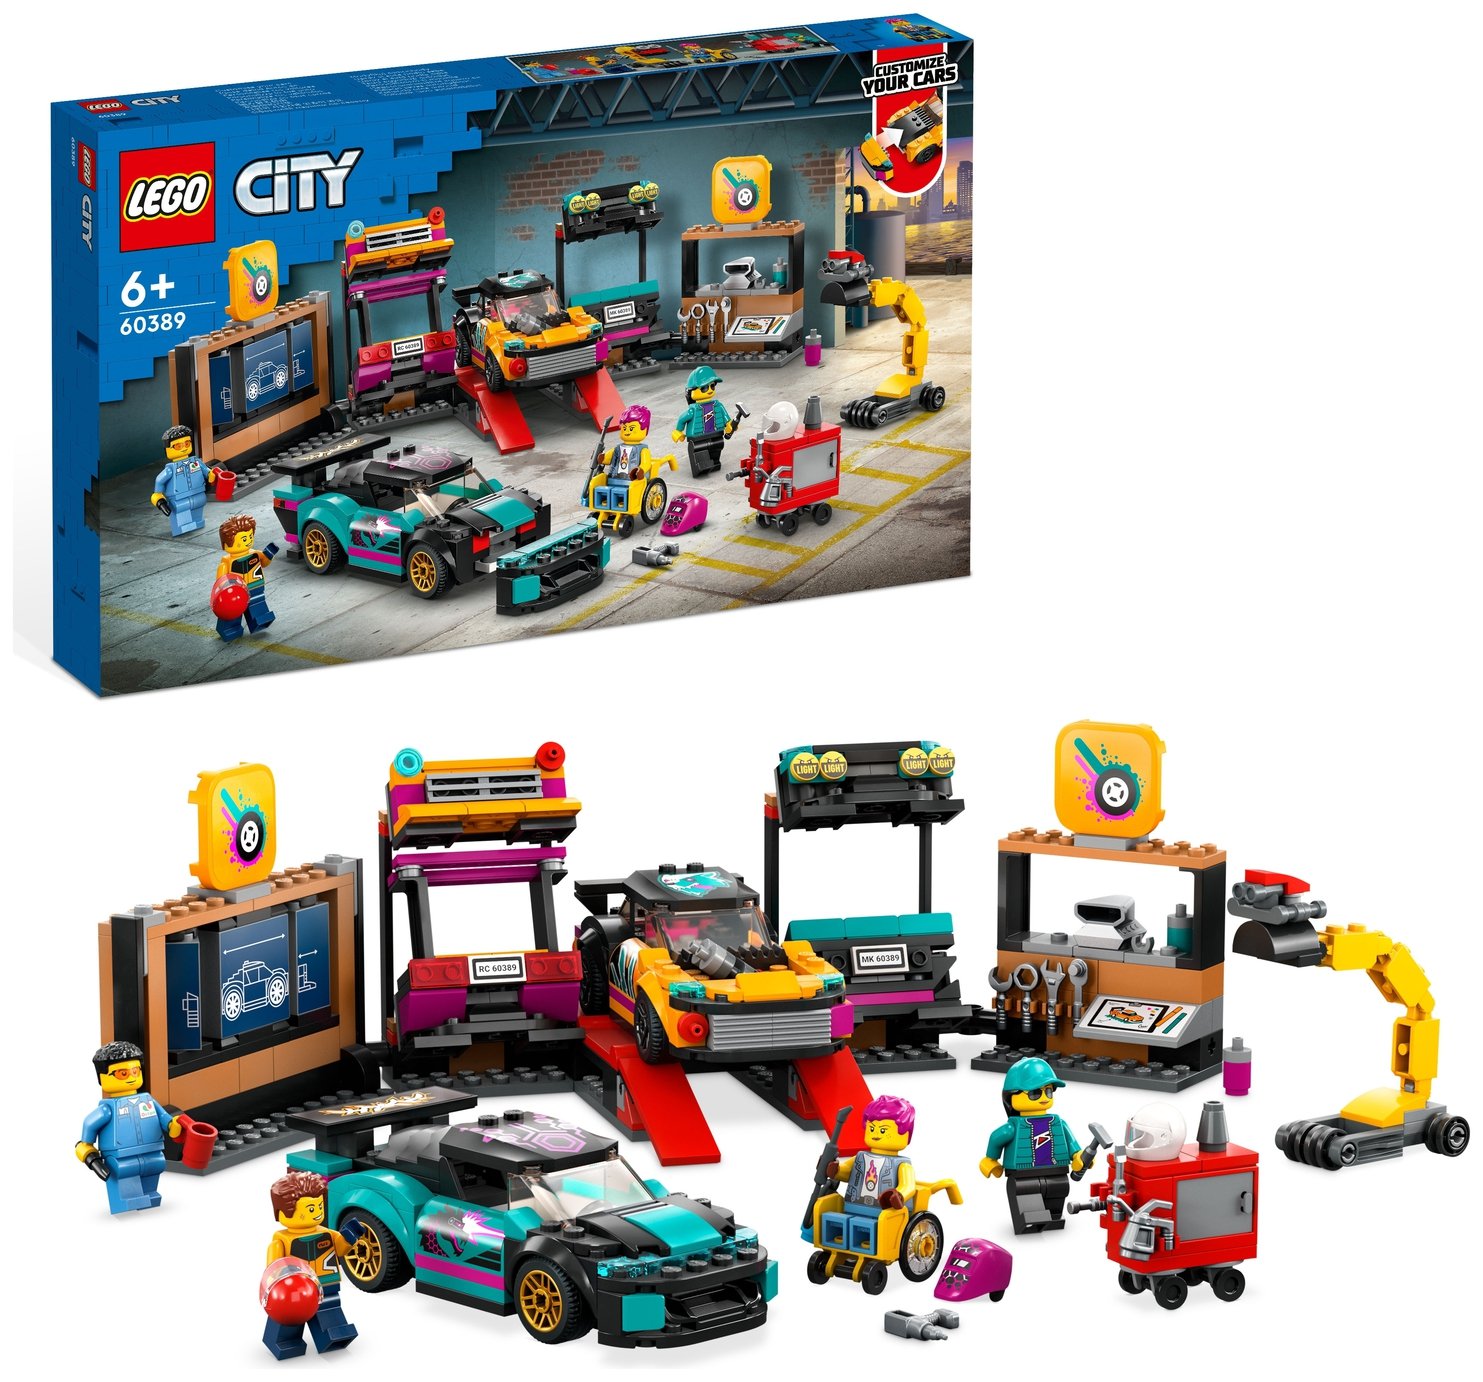 LEGO City Custom Car Garage Toy, Kids' Workshop Set 60389 review